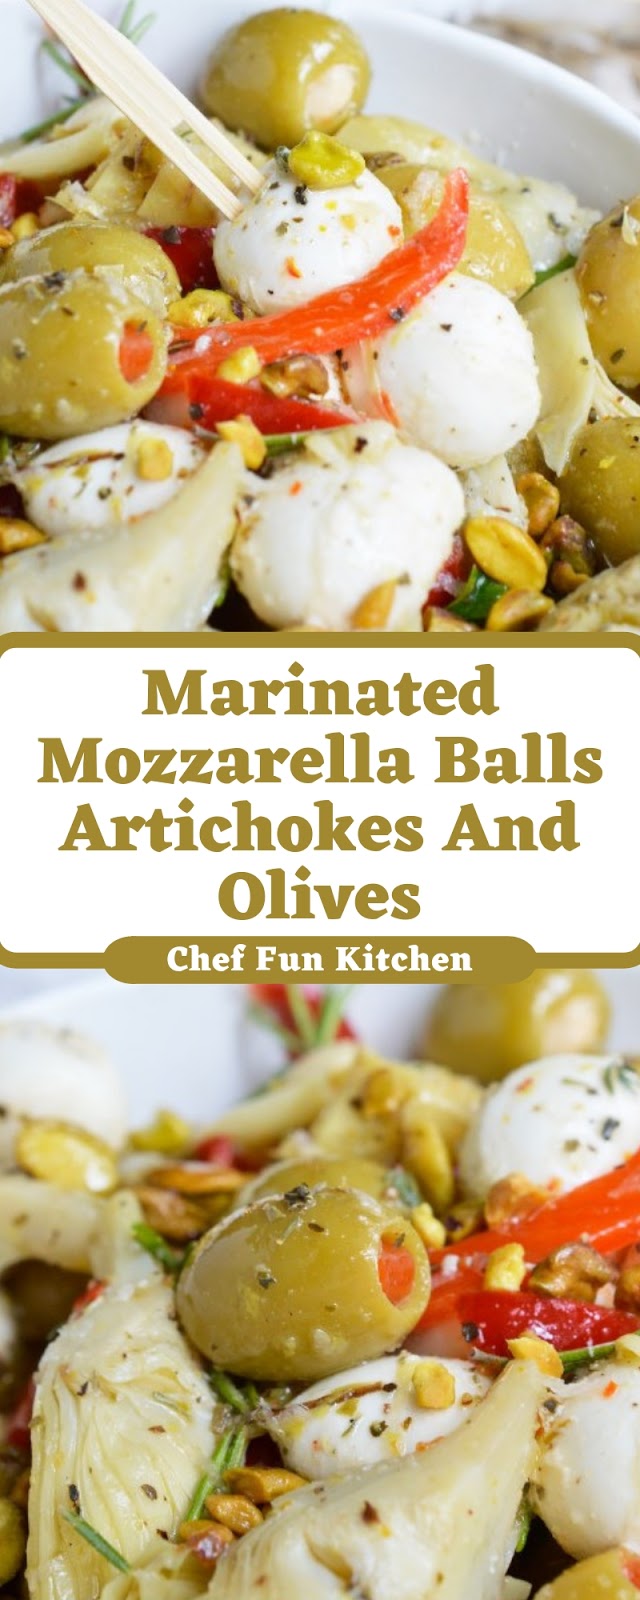 Marinated Mozzarella Balls, Artichokes And Olives